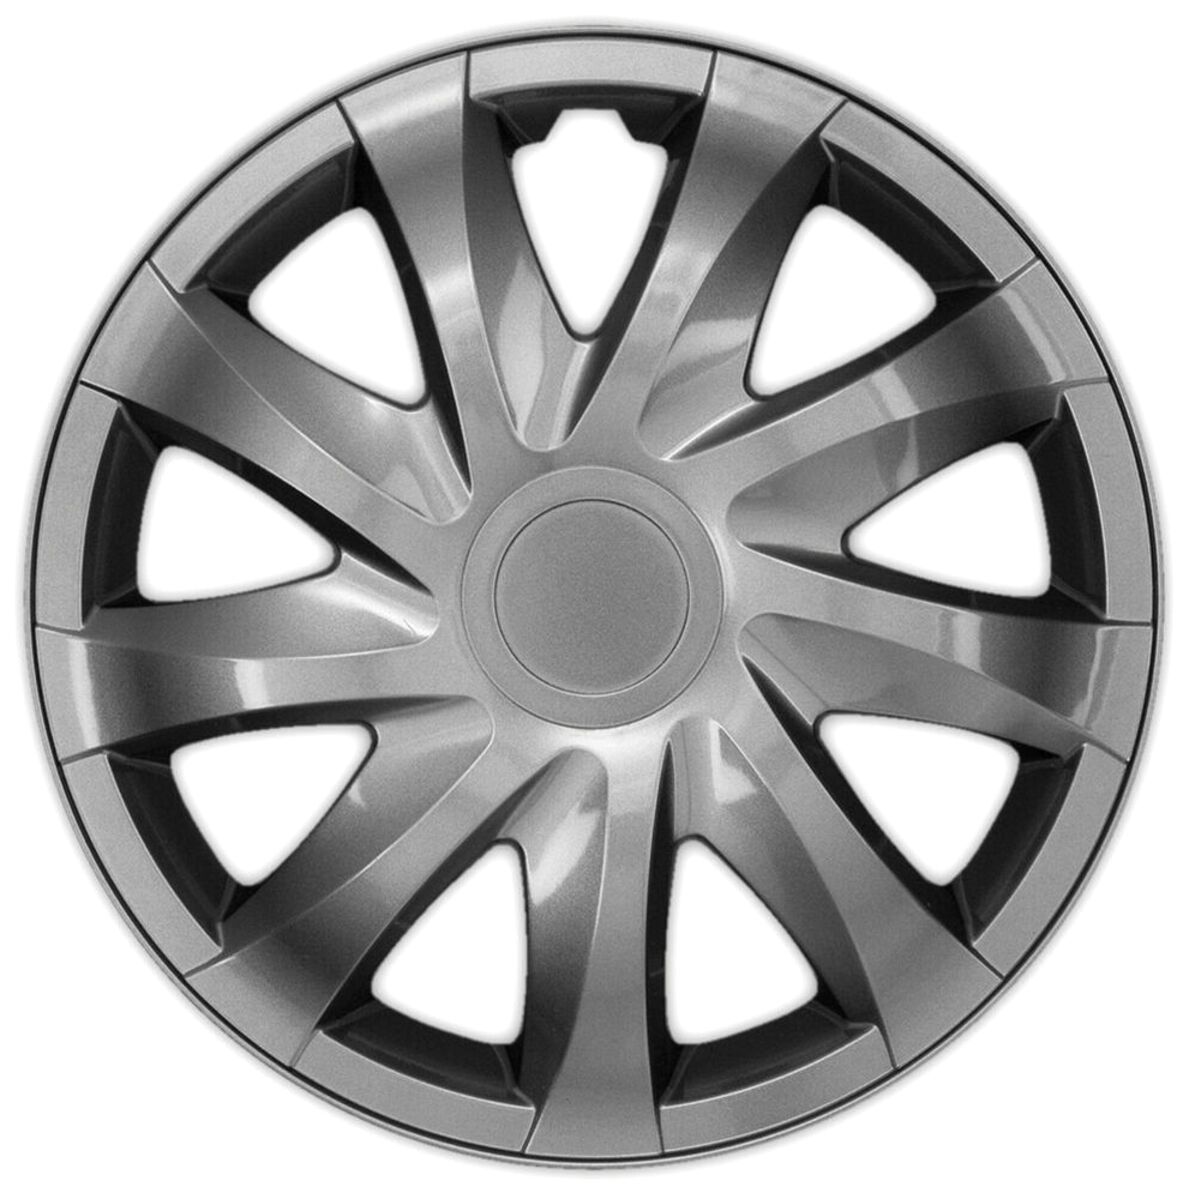 UKB4C 15 4 x Alloy Look Silver & Black Rush Multi-Spoke Wheel Trims Hub Caps Covers Protectors 